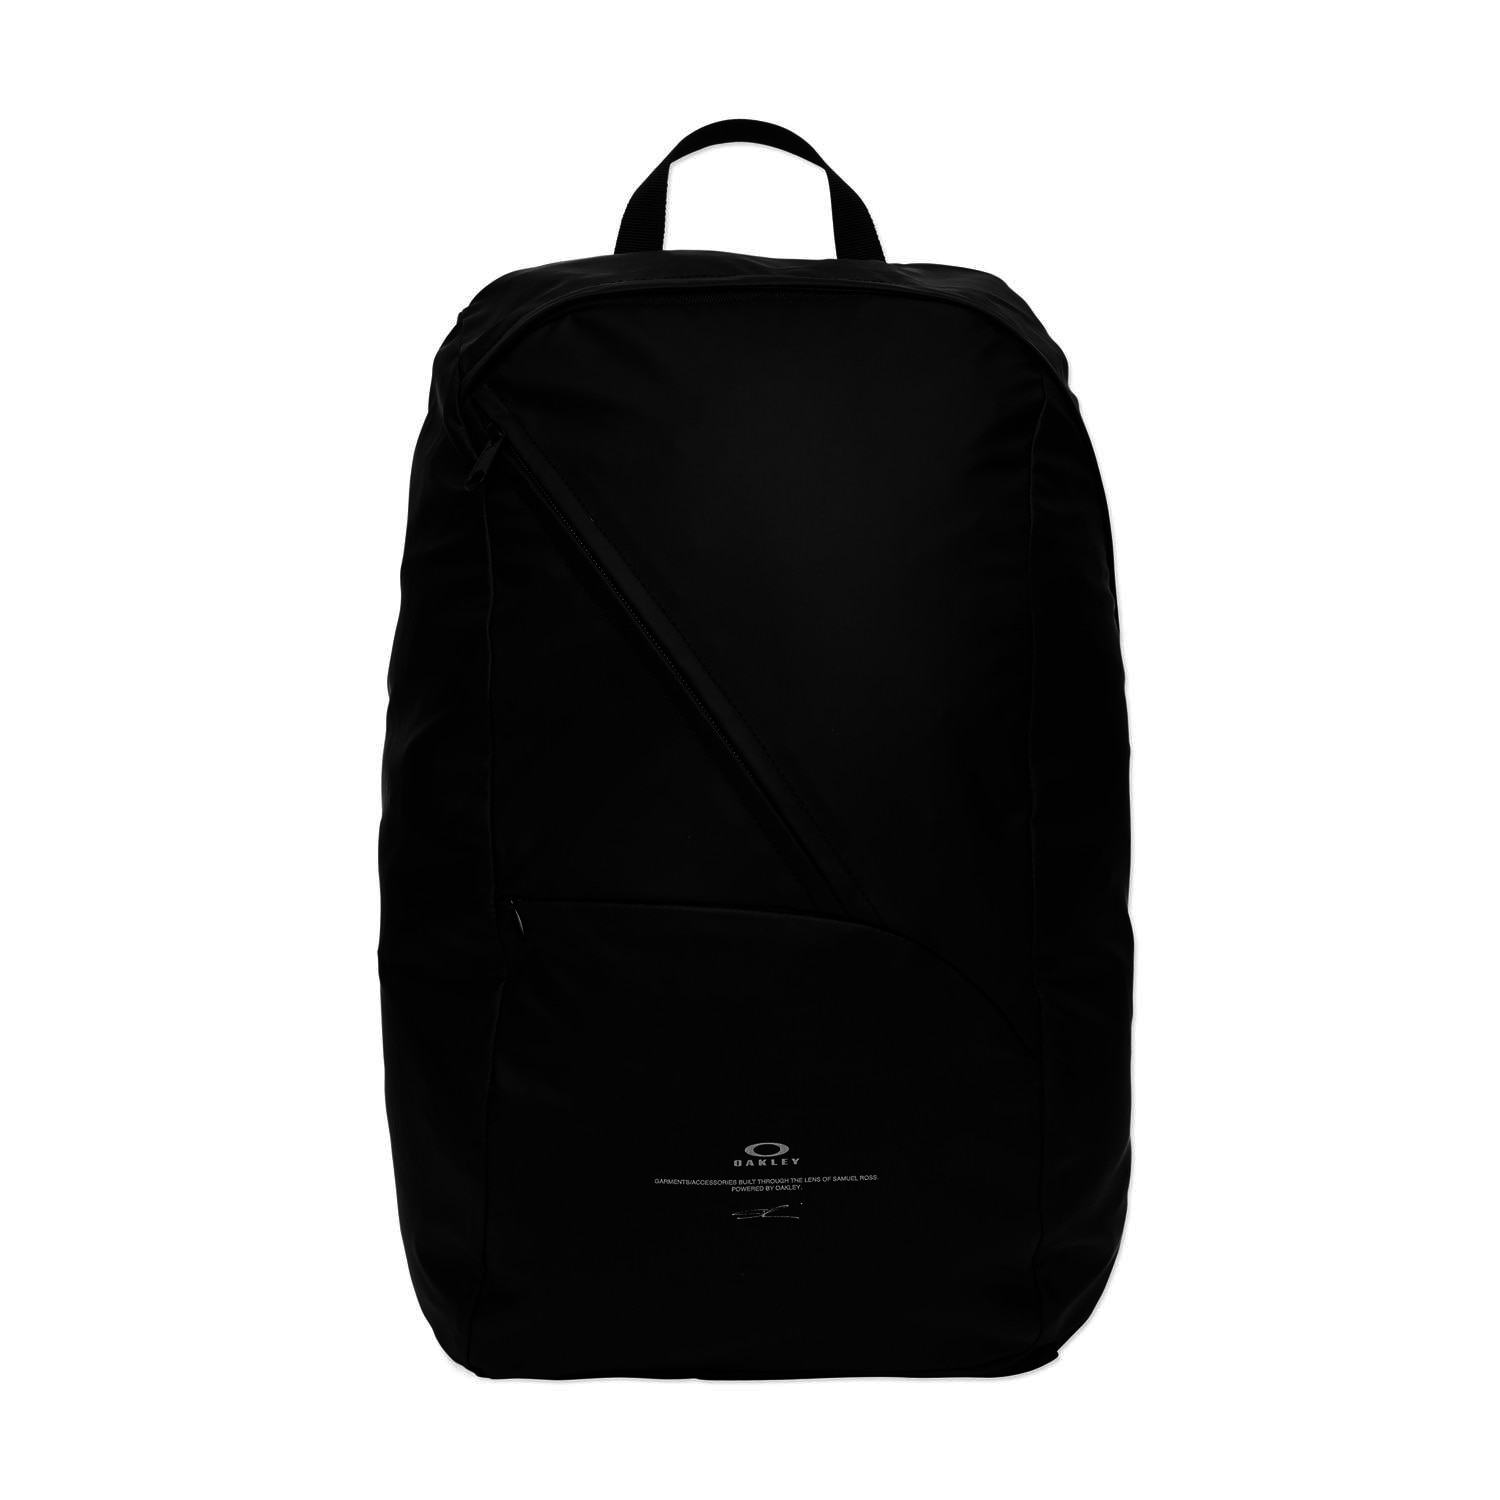 Oakley Packable Backpack - Blackout 